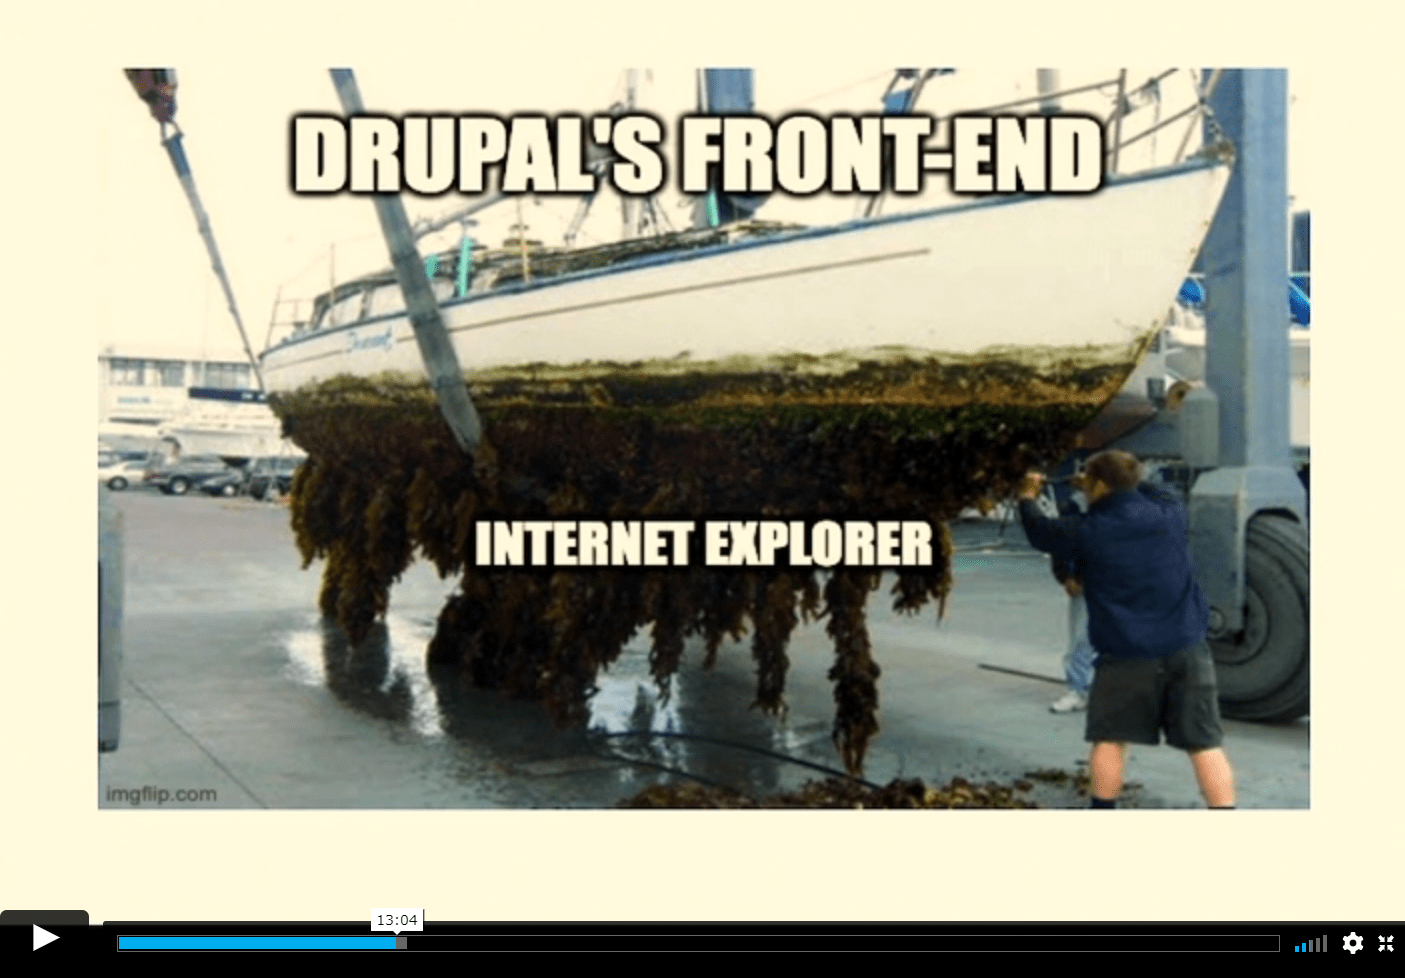 Internet Explorer shown at DrupalCon Prague as a stumbling block for Drupal’s frontend development.